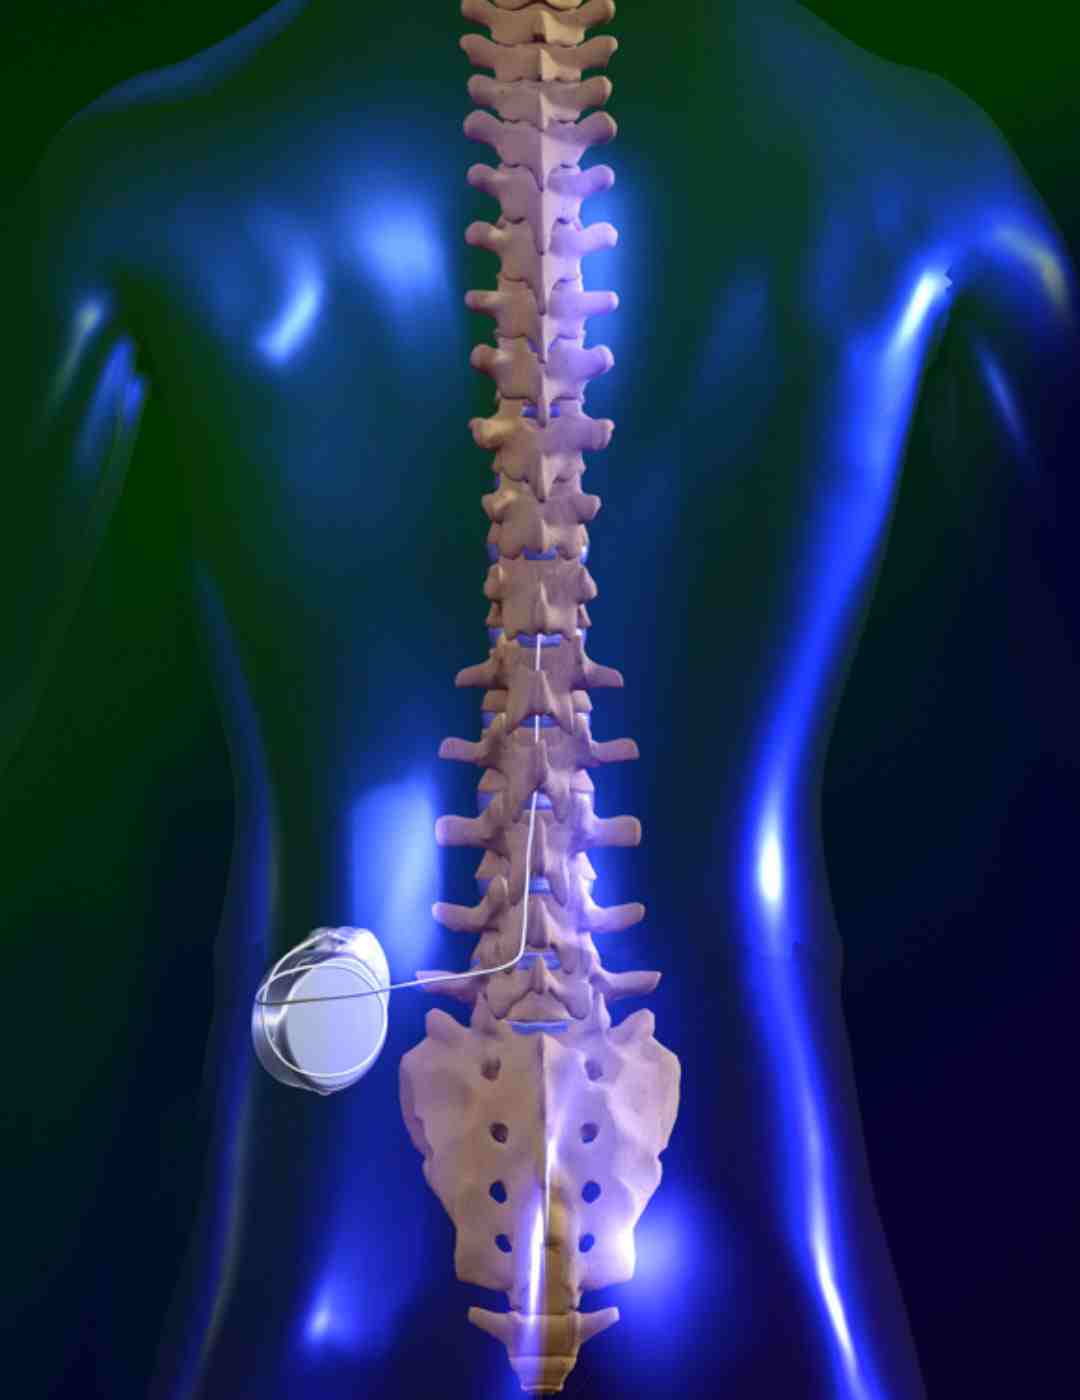 abbott spinal cord stimulator reviews